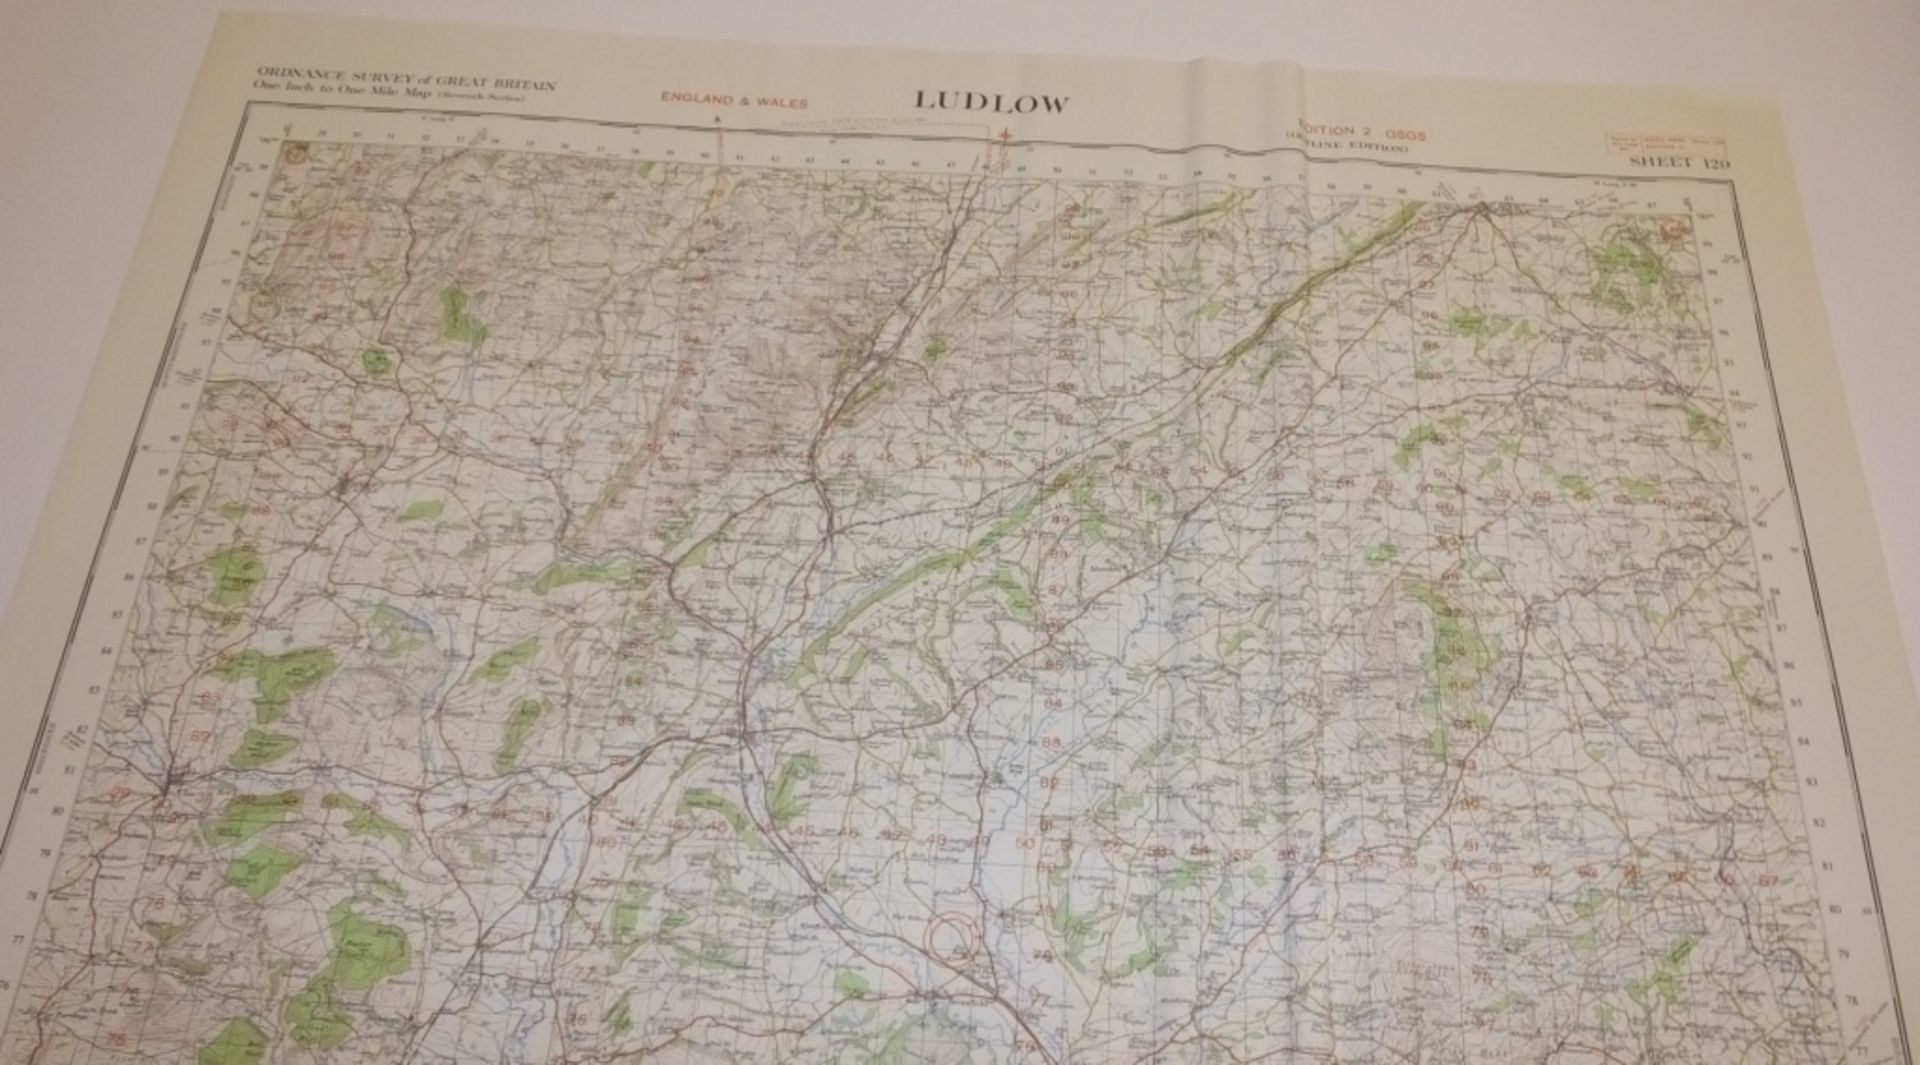 27x ENGLAND & WALES MAP LUDLOW 1INCH 1MILE 1954 7TH SERIES 2GSGS SHEET 129 - Bild 2 aus 5